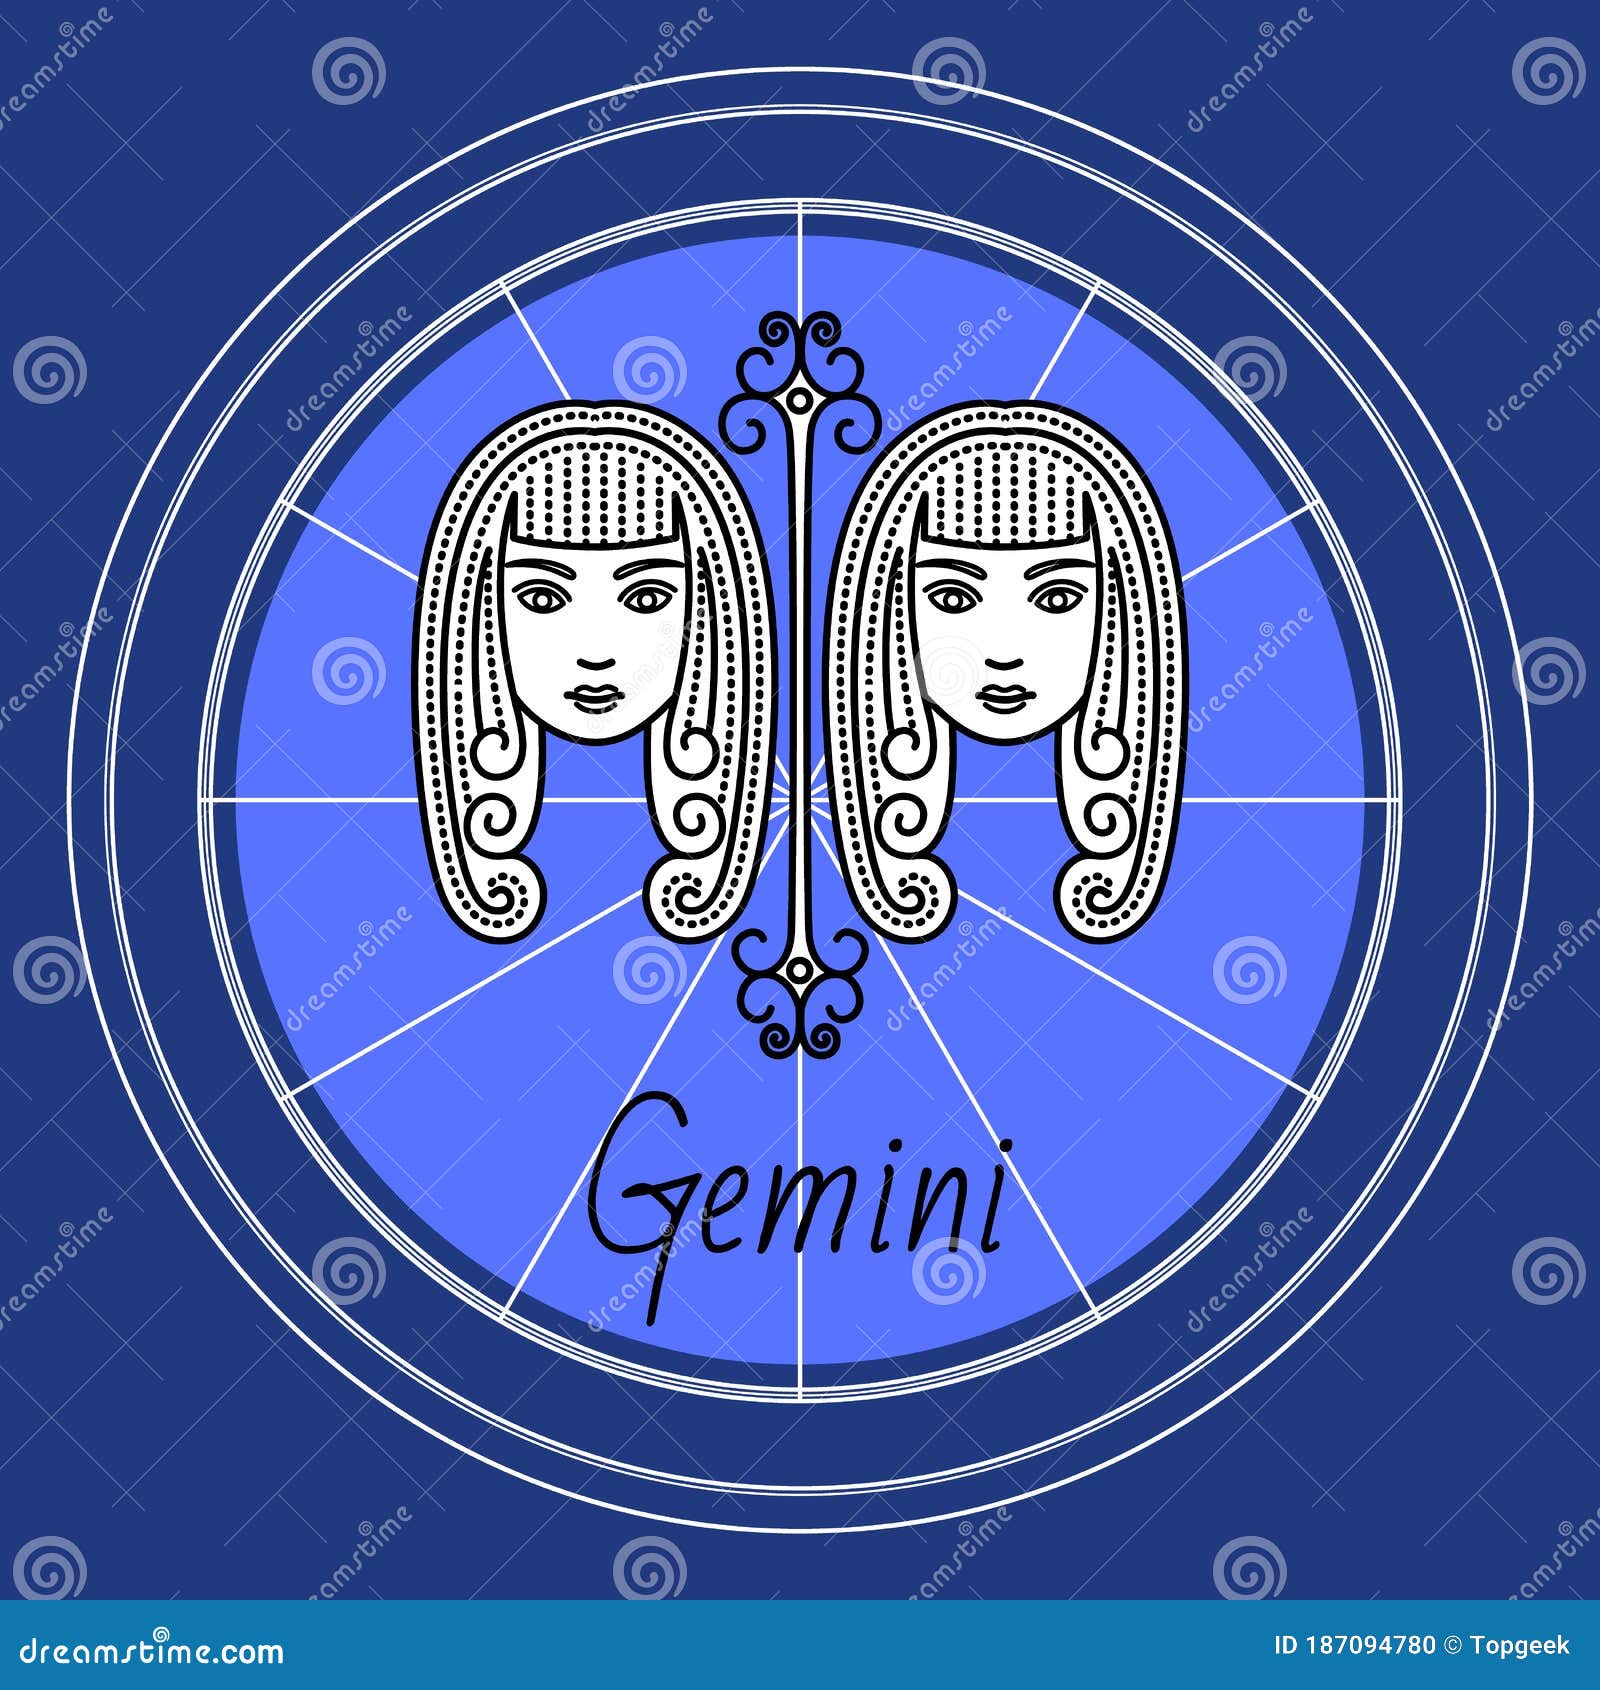 Gemini Zodiac Sign of Twins, Horoscope Astrology Stock Vector